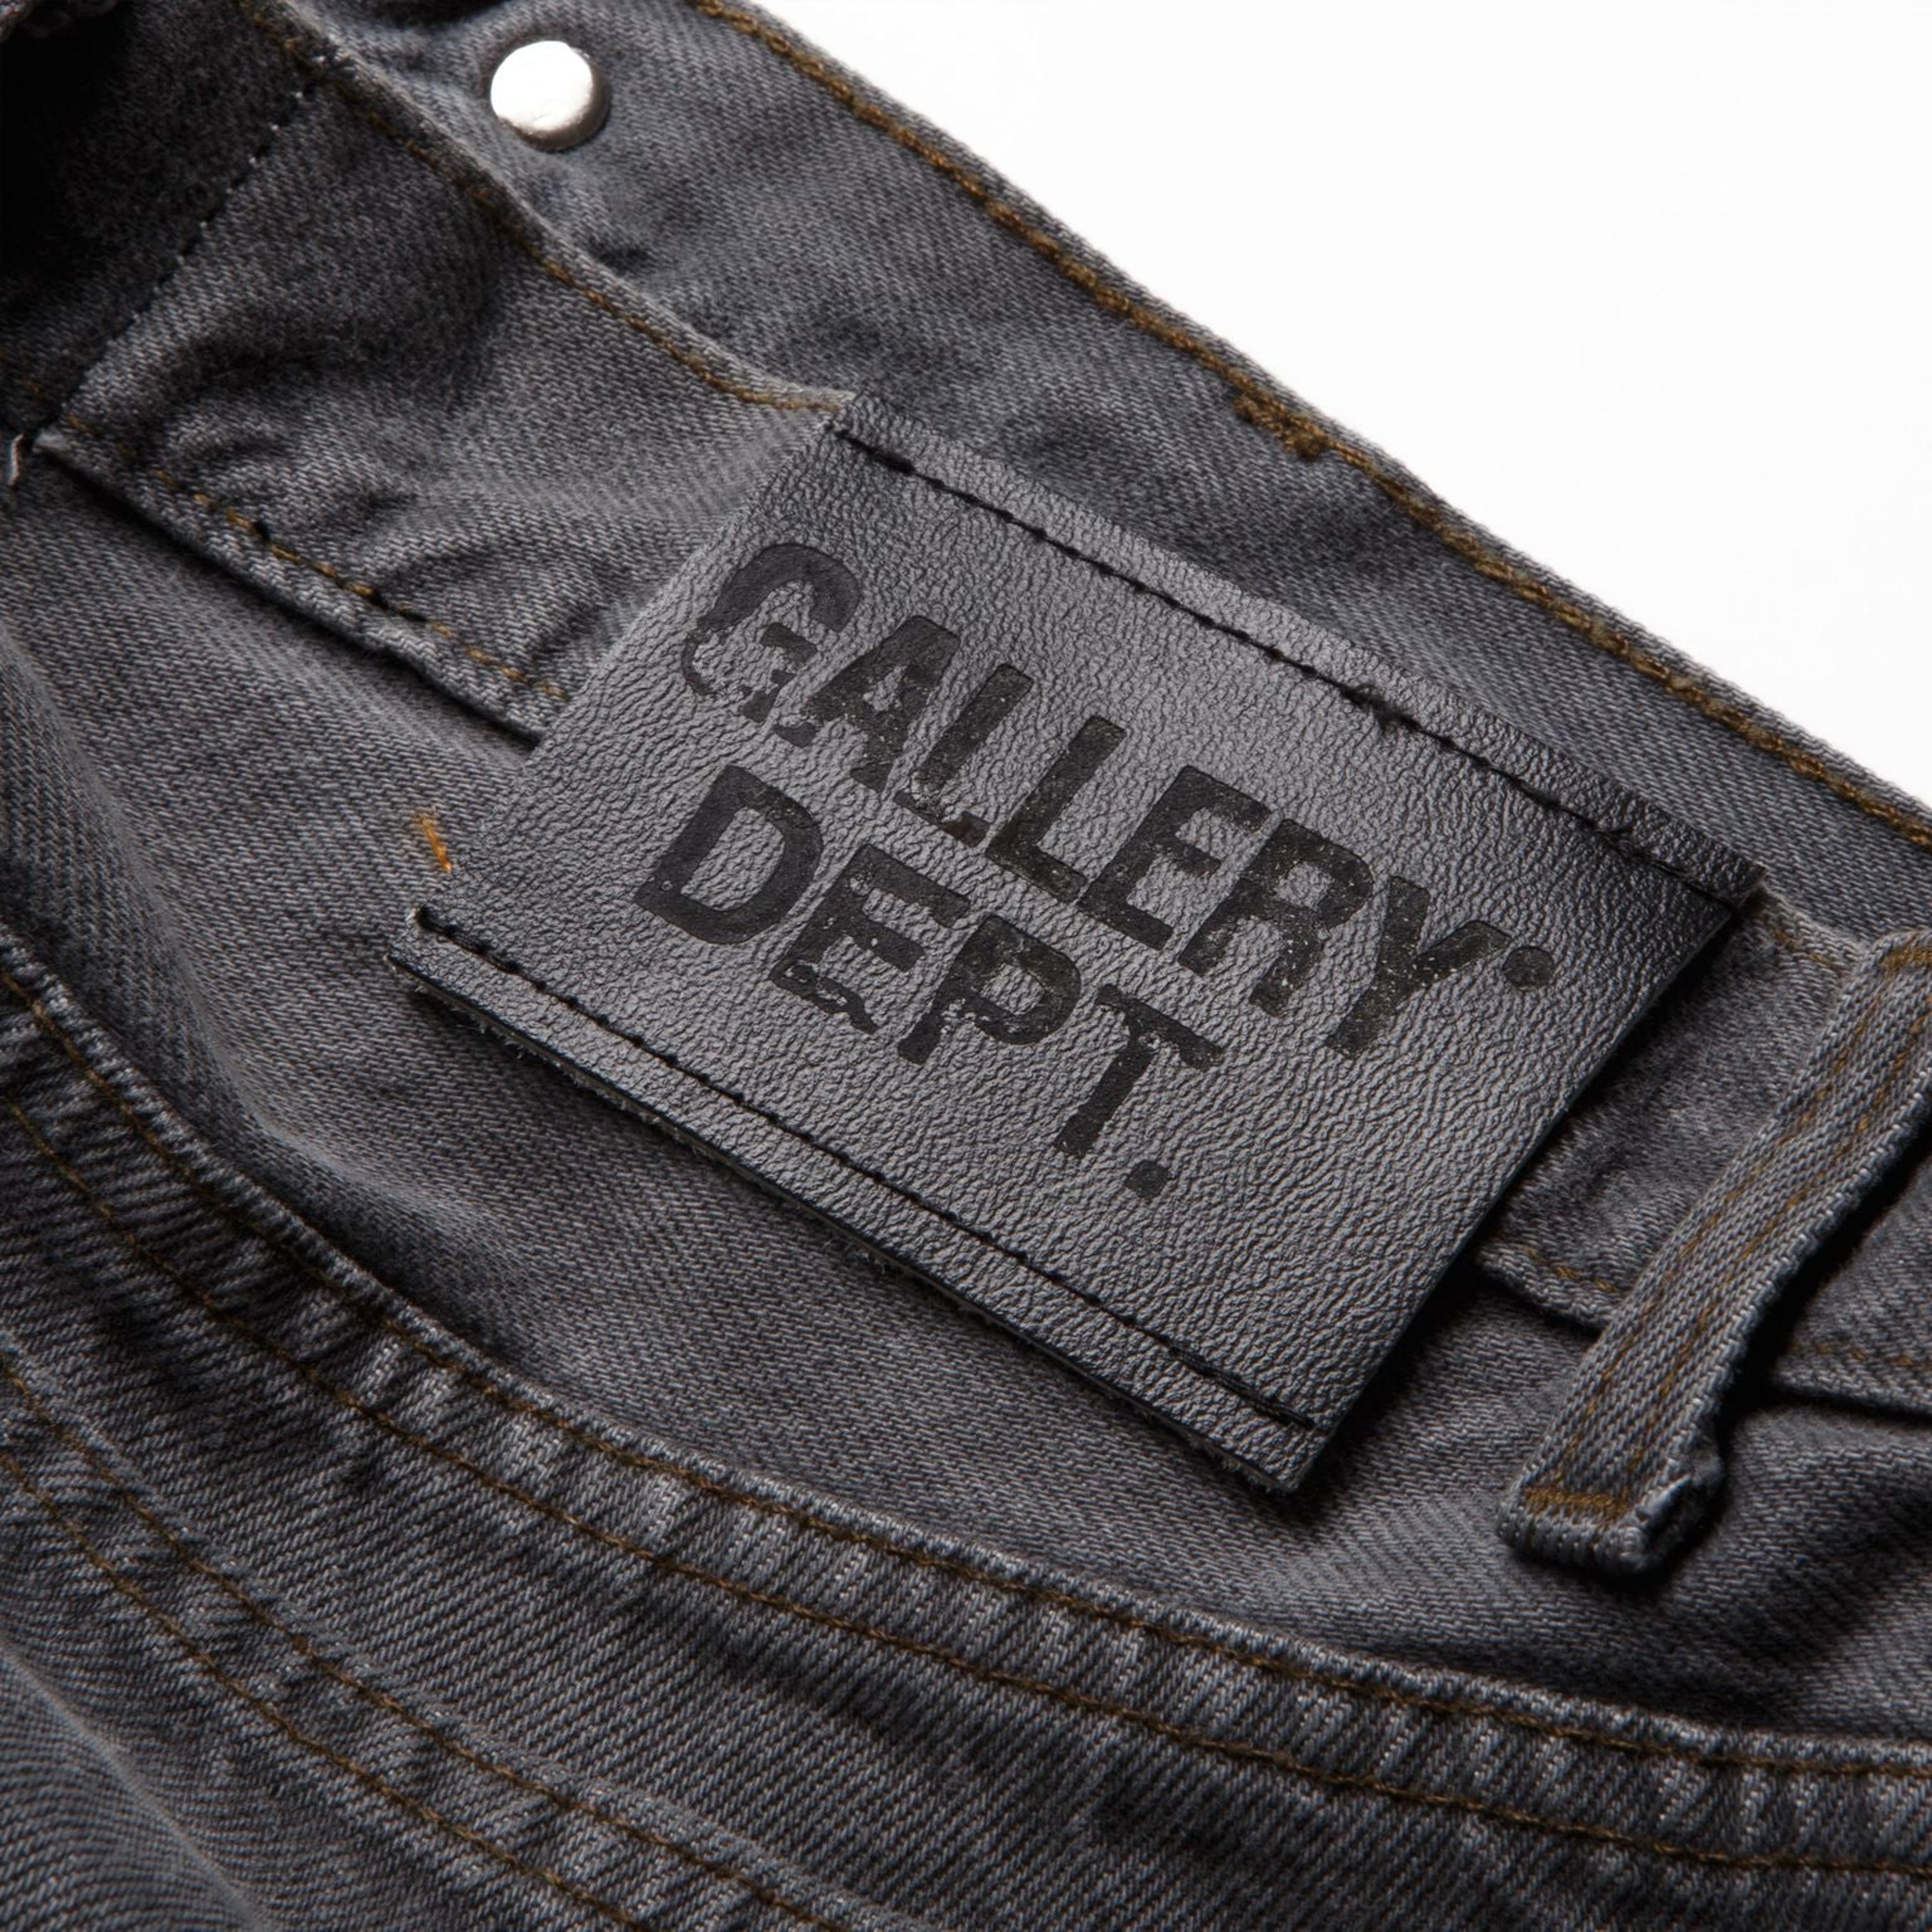 Alternate View 3 of Gallery Dept. Rework 501 Jeans Washed Black